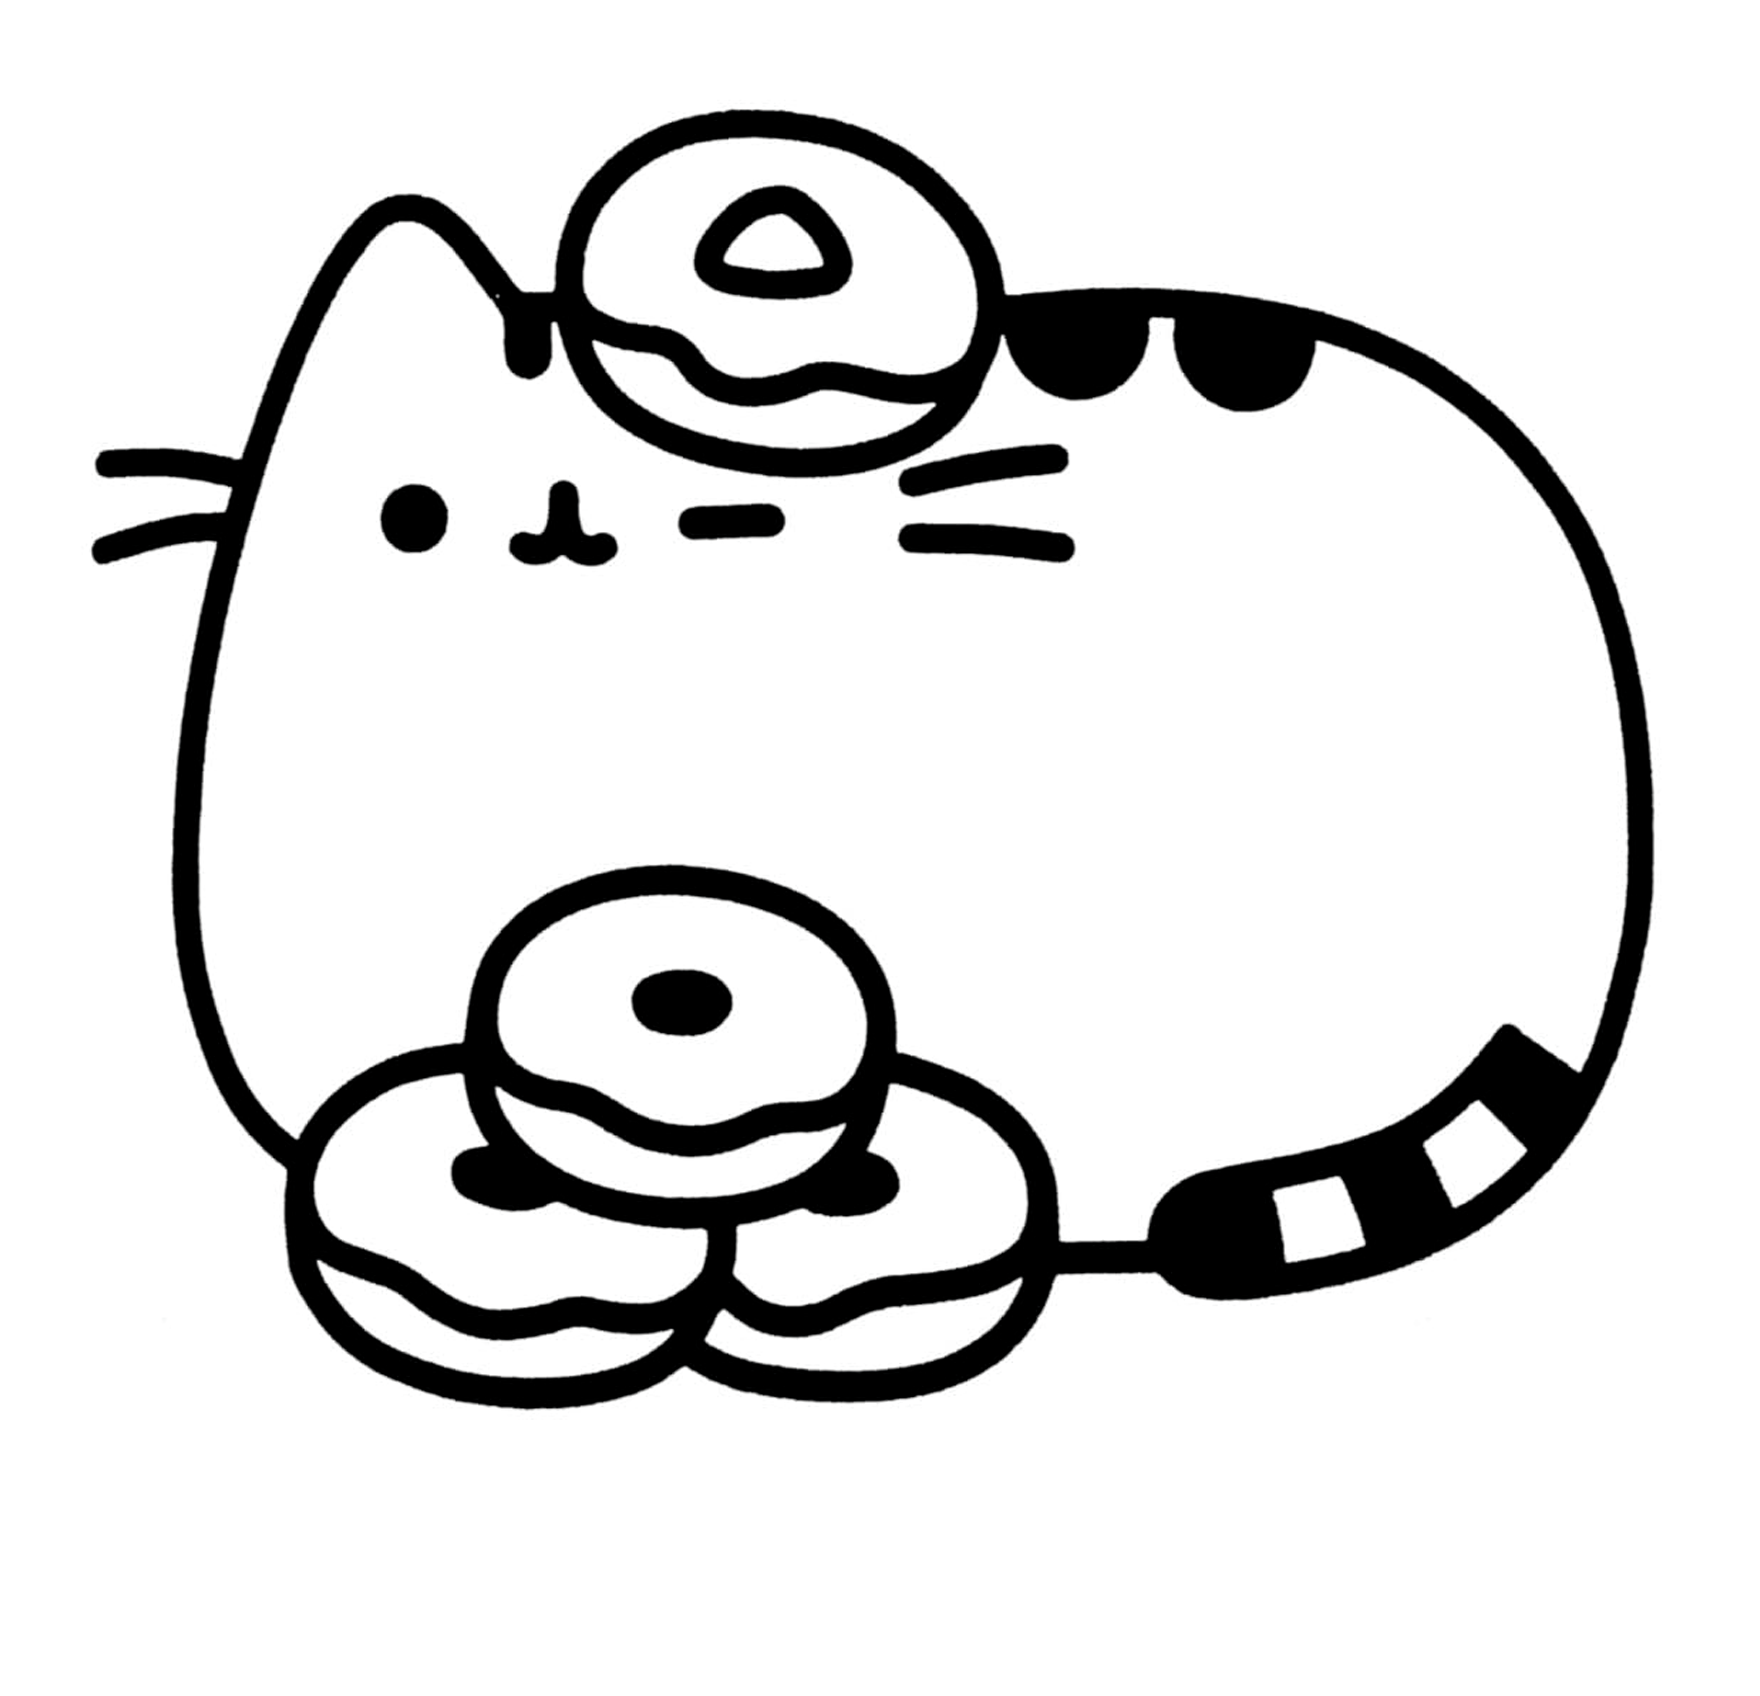 Pusheen Cat - Pusheen Cat con un biscotto sulla testa